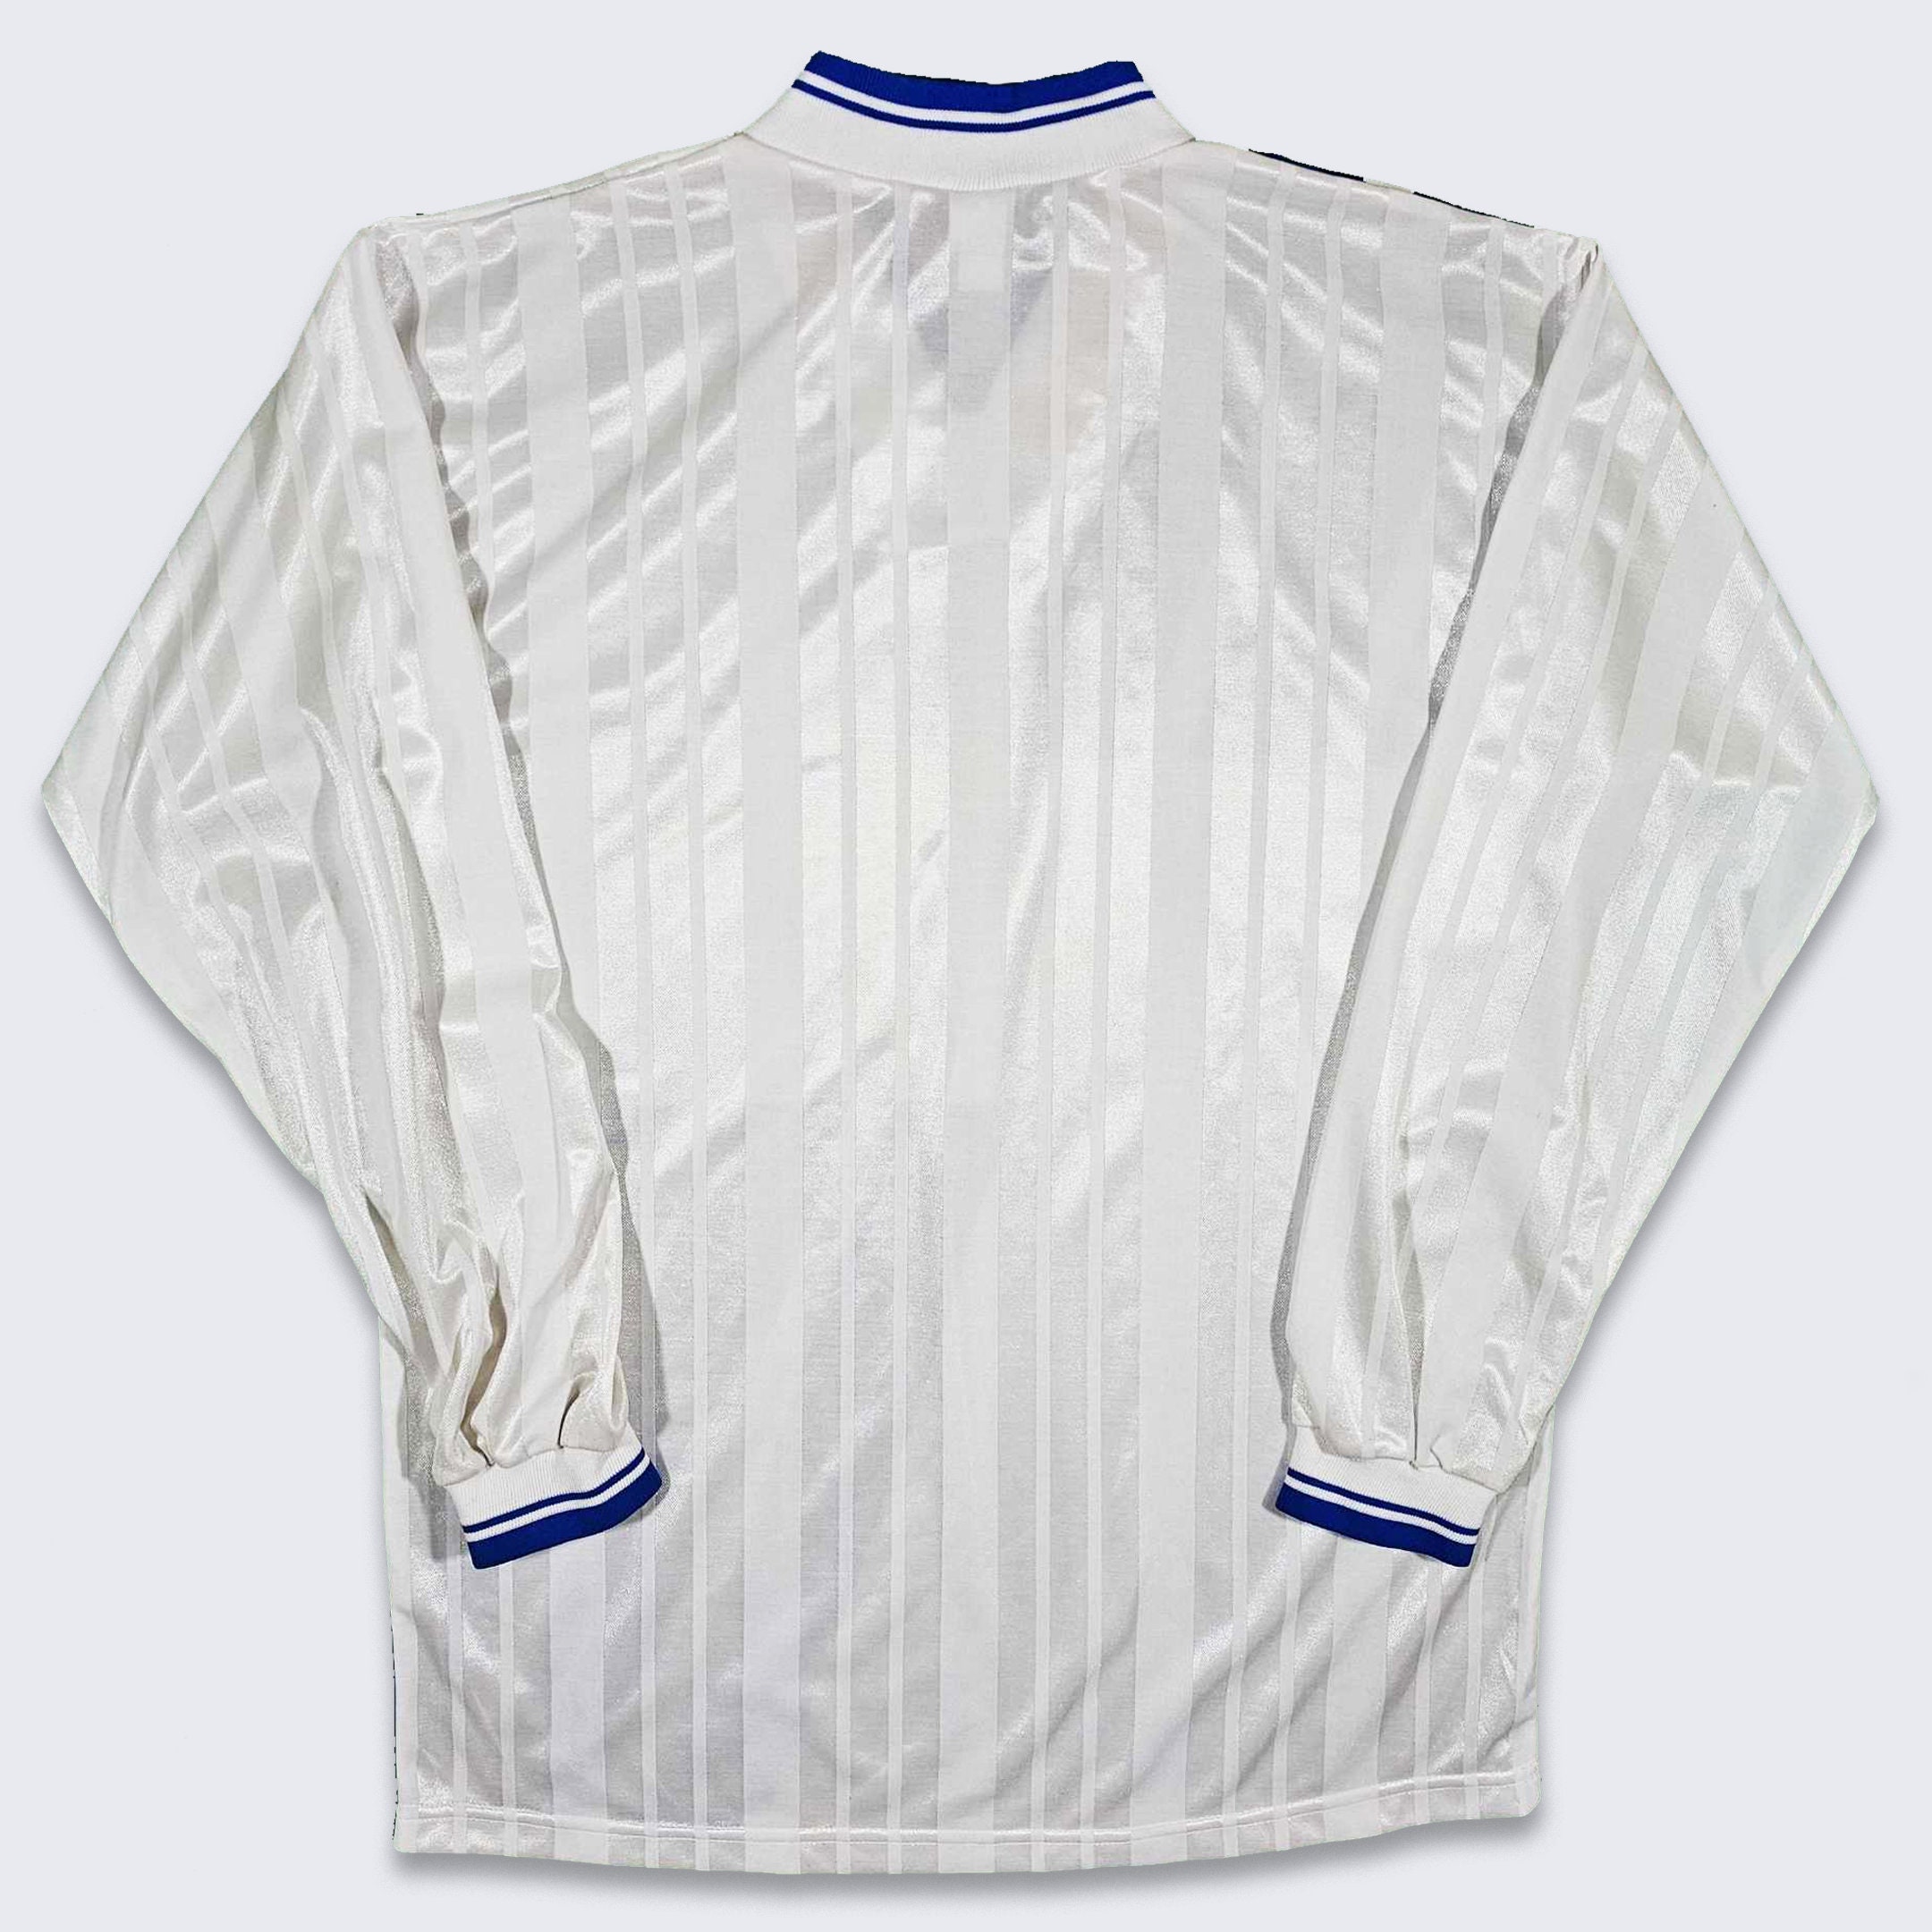 Rare Vintage 90’s Adidas USA US World Cup Team Futbol Soccer Jersey Eqipment